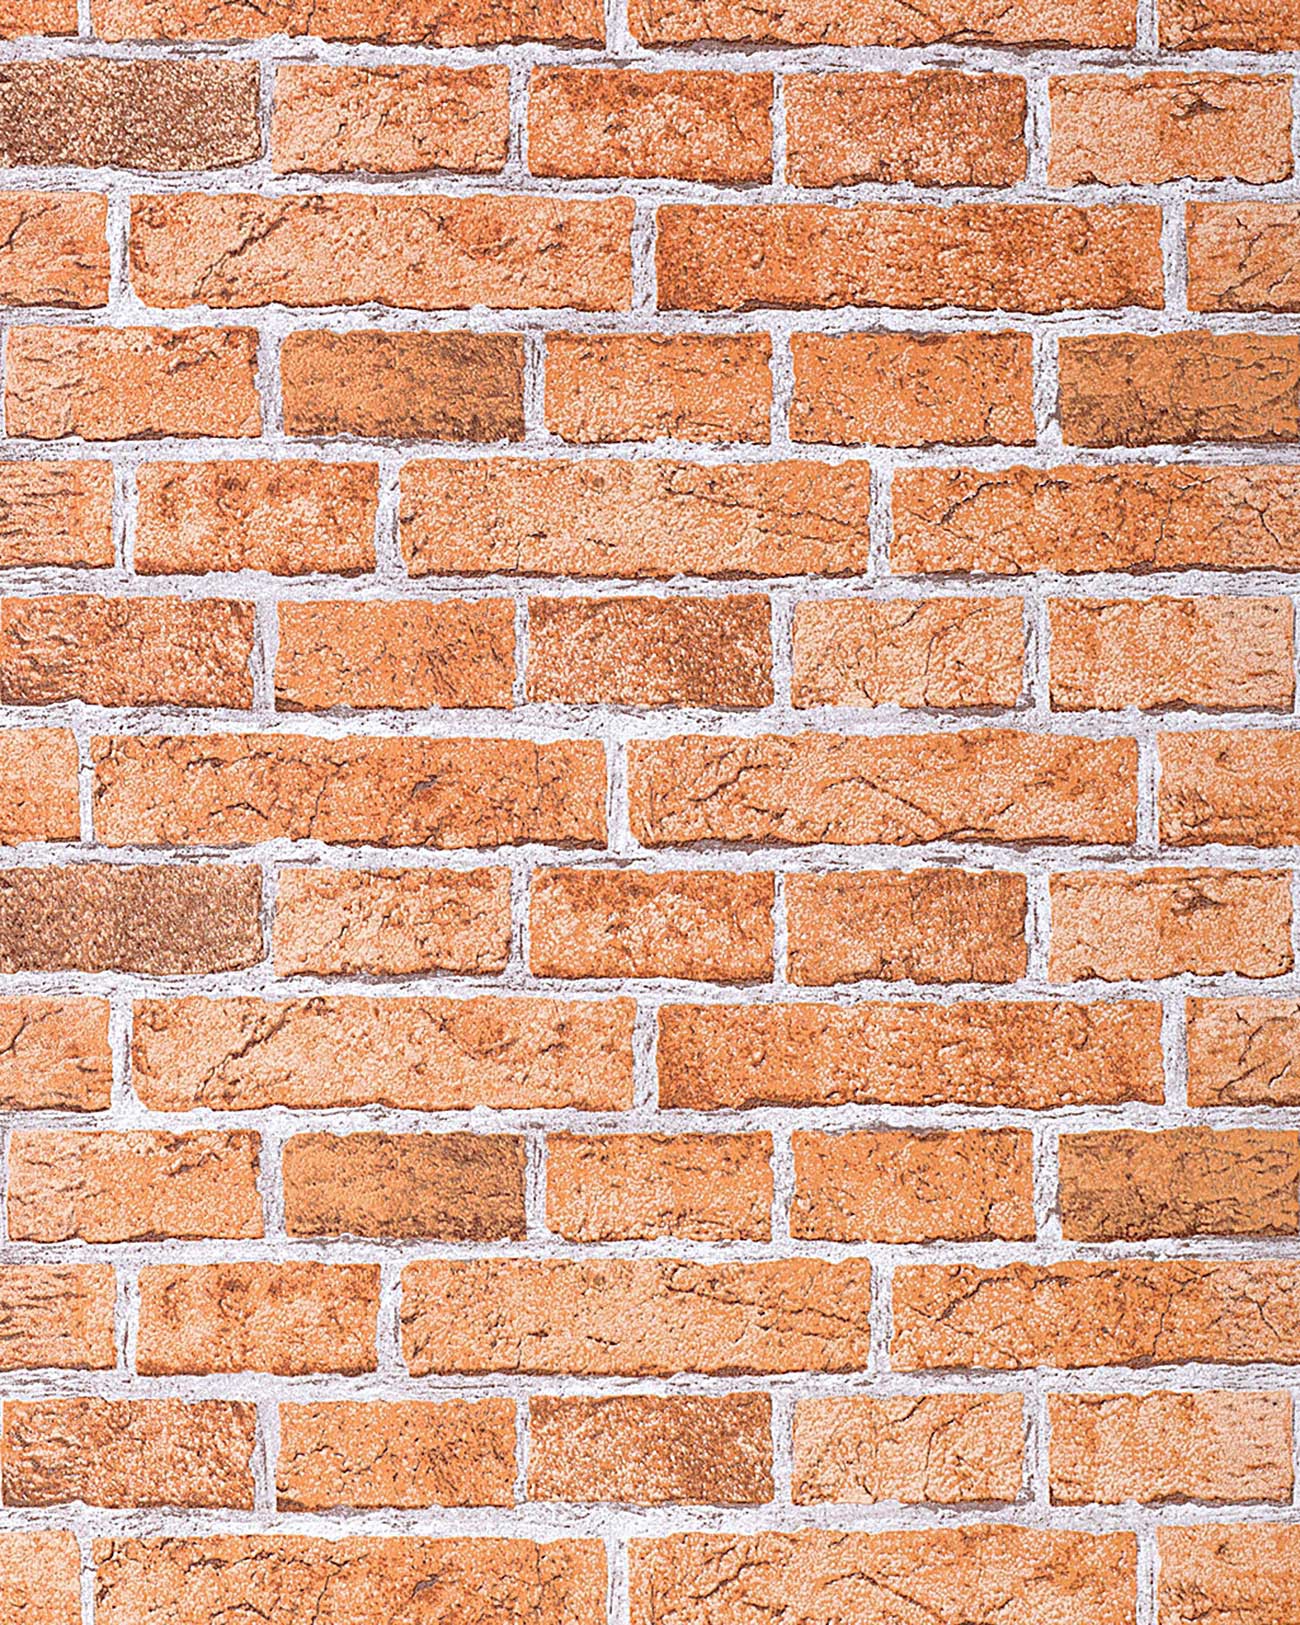  23 Rustic design brick wallpaper decor vintage stone look brown eBay